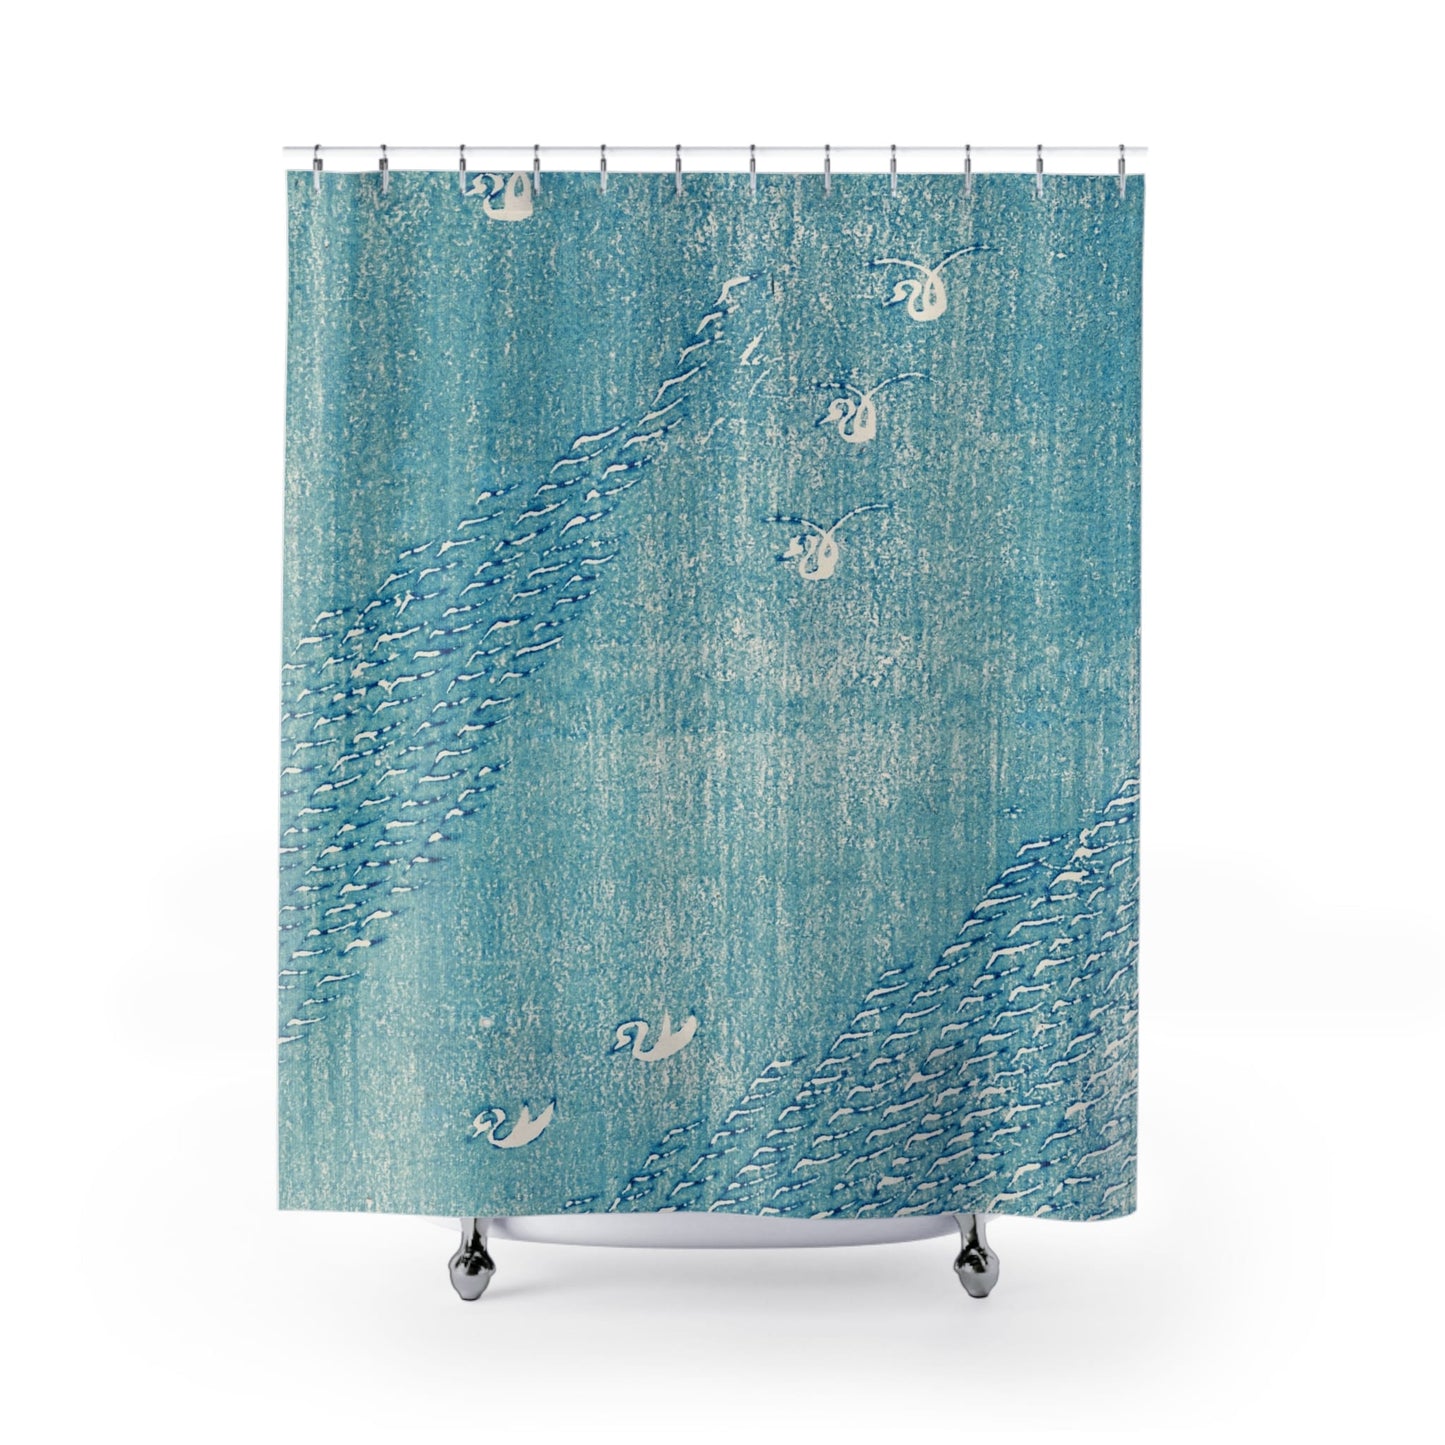 Light Blue Minimalist Shower Curtain with woodblock print design, artistic bathroom decor showcasing minimalist Japanese art.